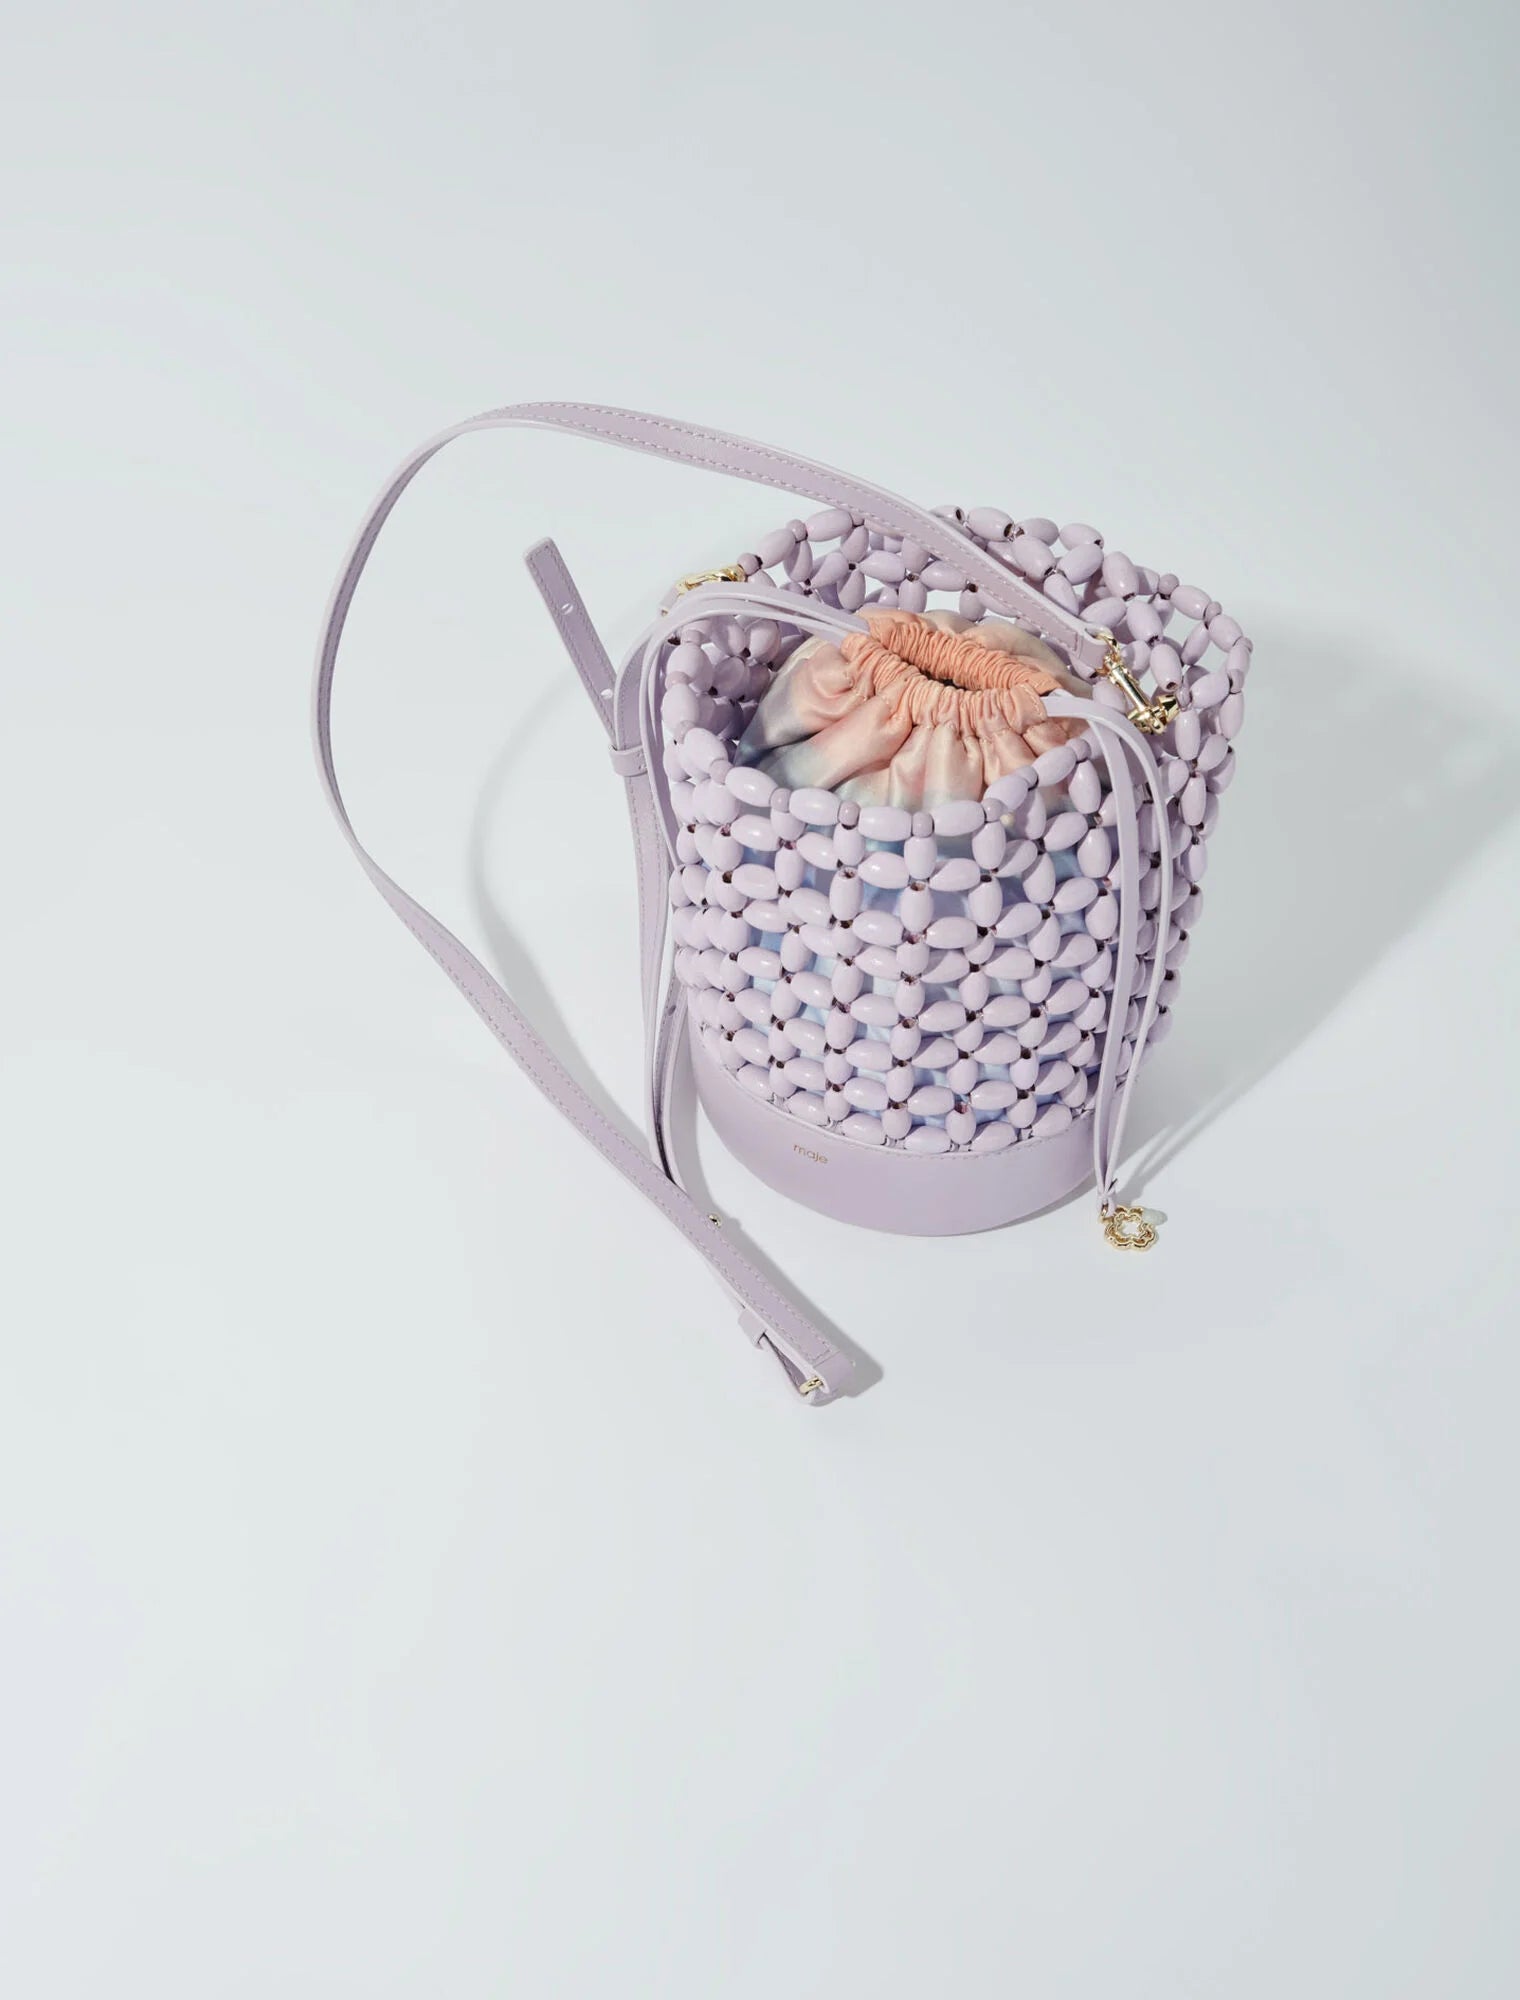 Parma Violet-Bucket bag embellished with beads